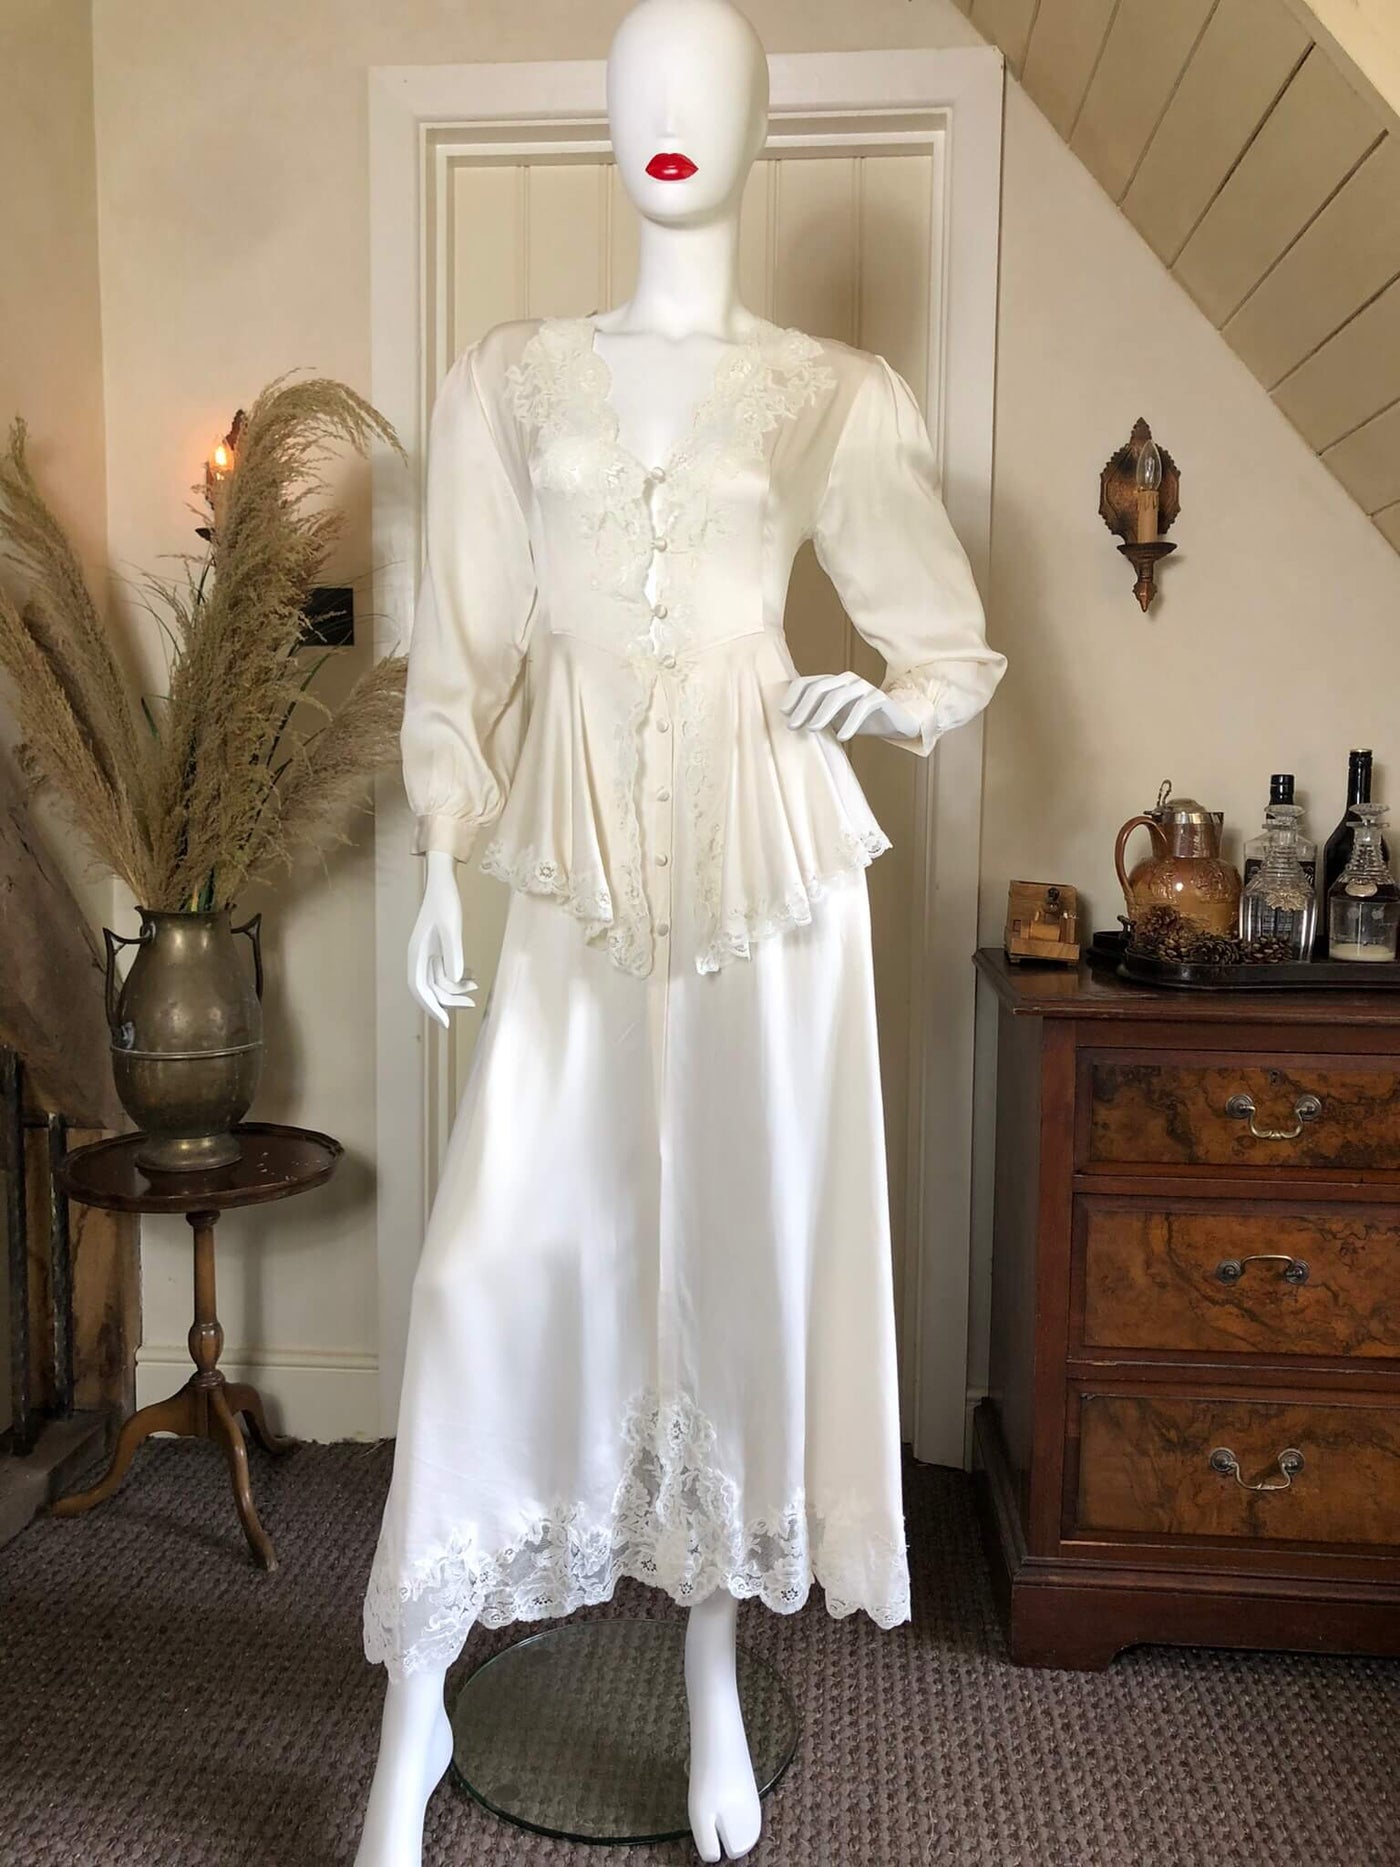 Ivory silk Janet Reger dress